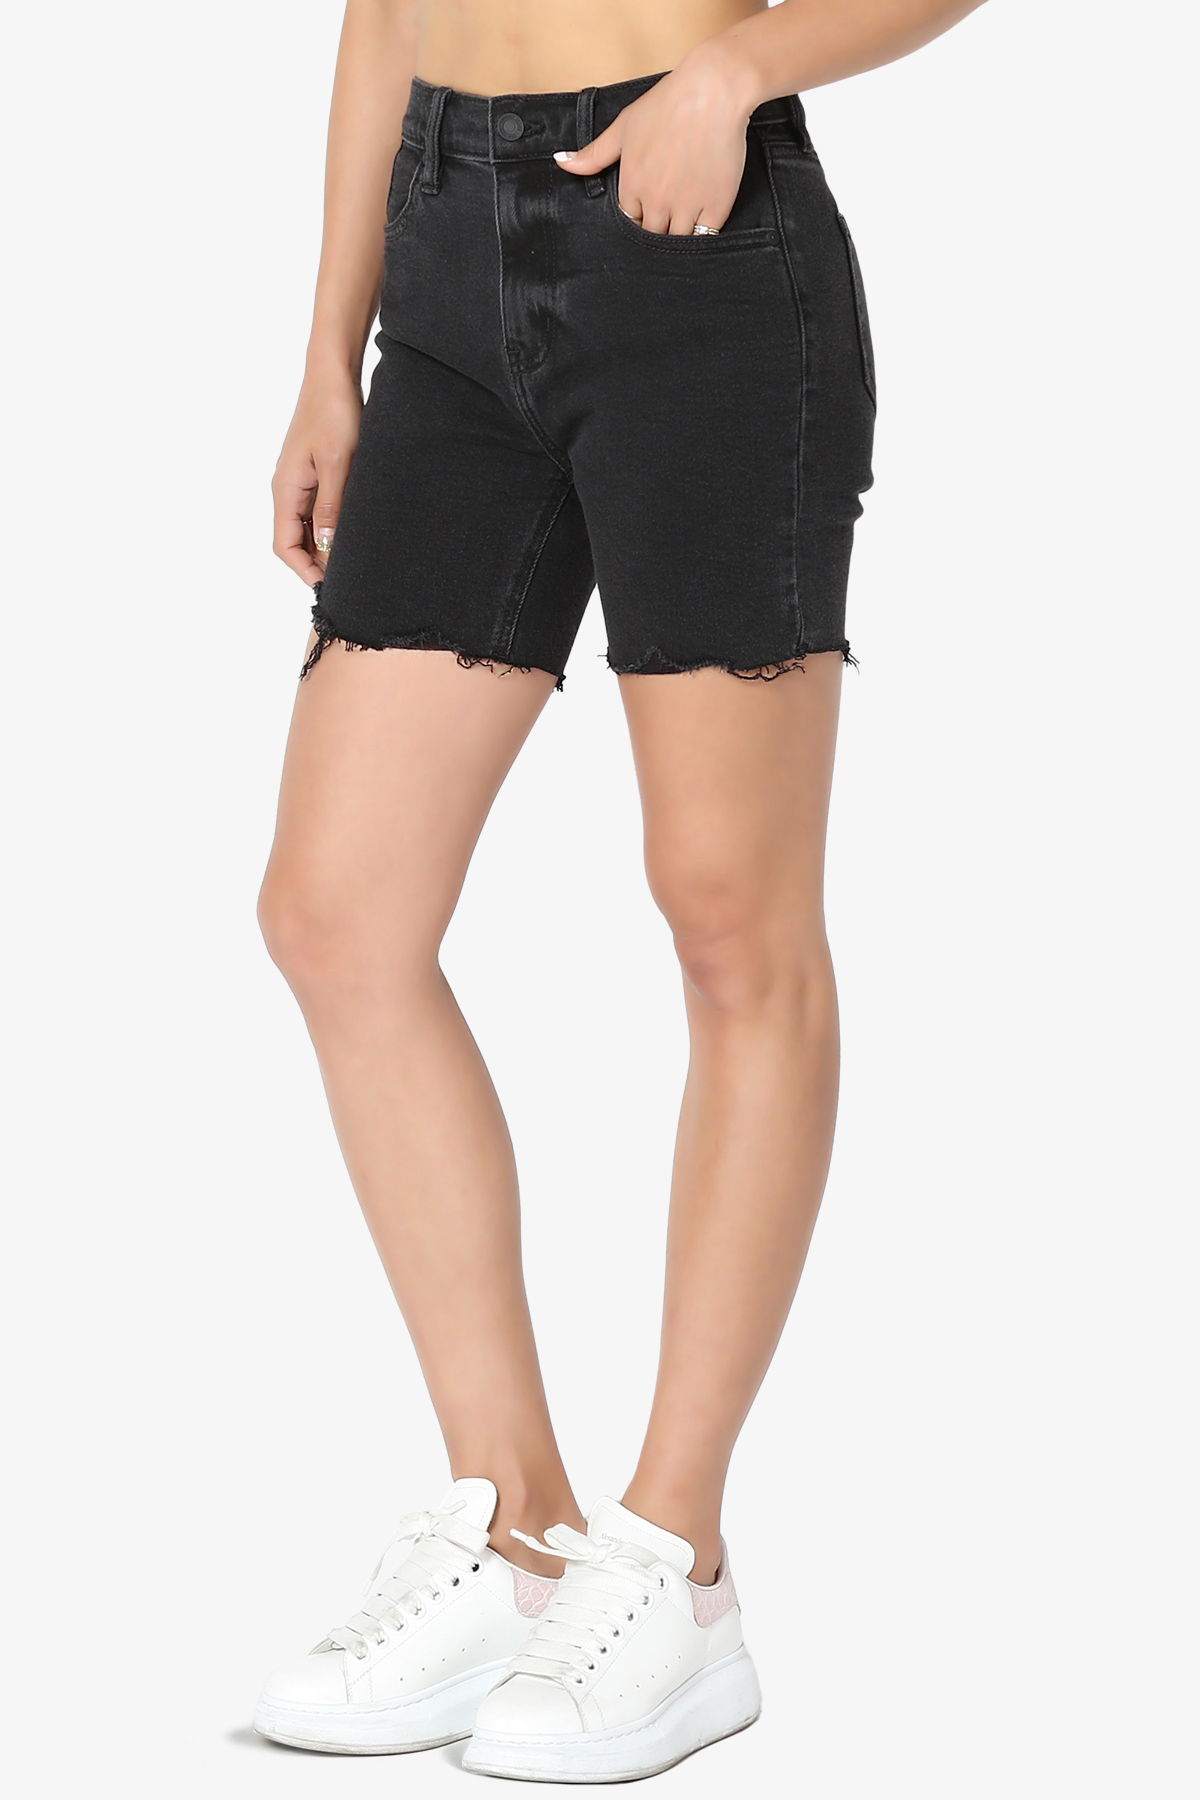 TheMogan Women's High Rise Mid Thigh Stretch Denim Skinny Jean Shorts Washed Black - image 4 of 7